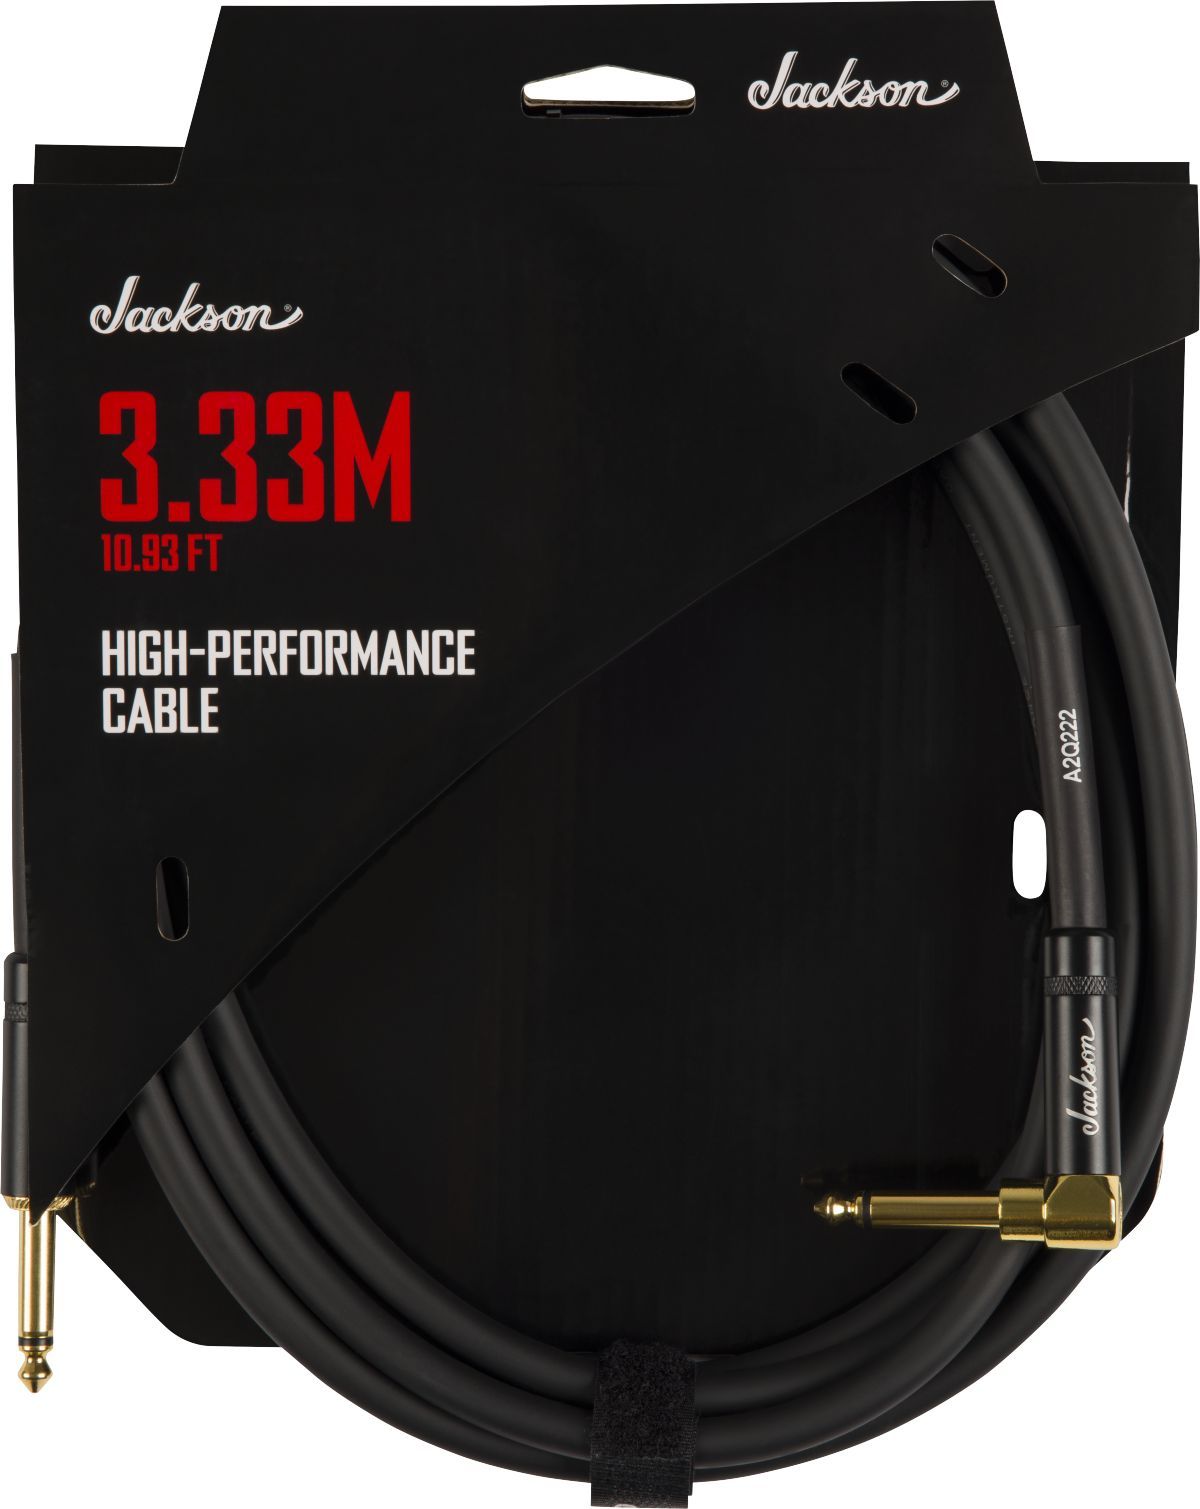 Jackson High Performance Cable Black 3.33m